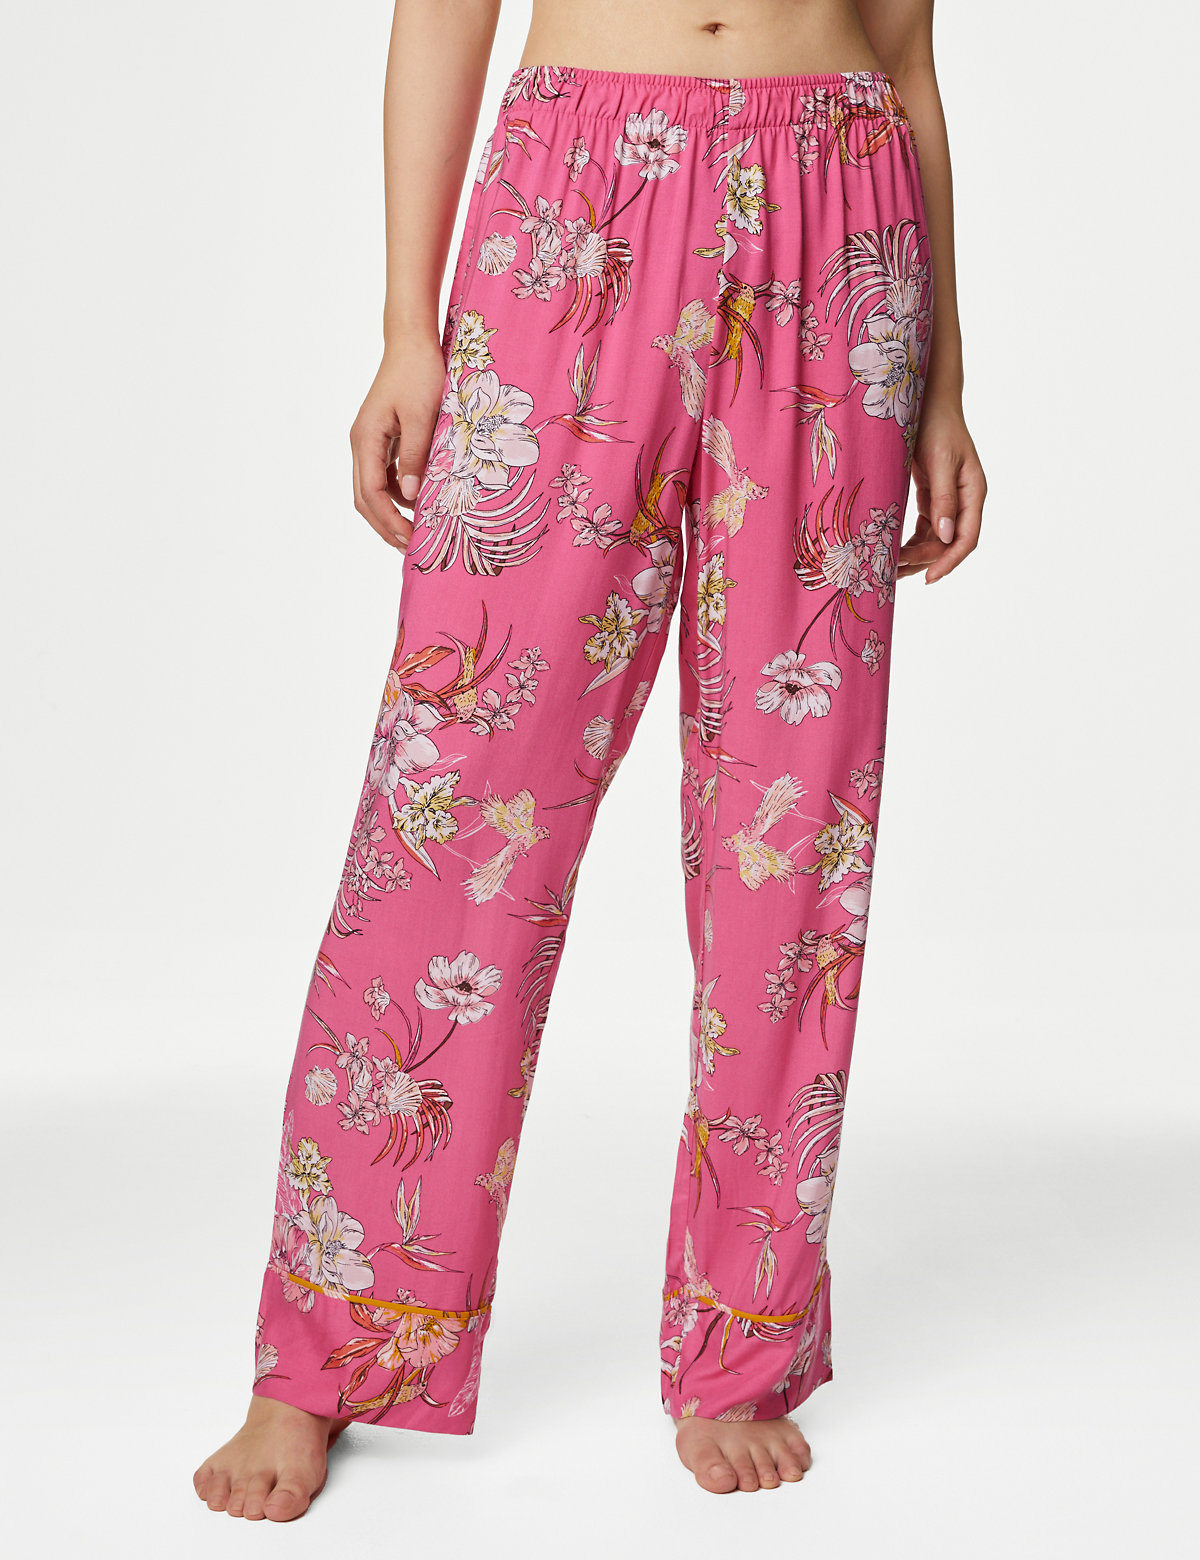 Floral Pyjama Bottoms